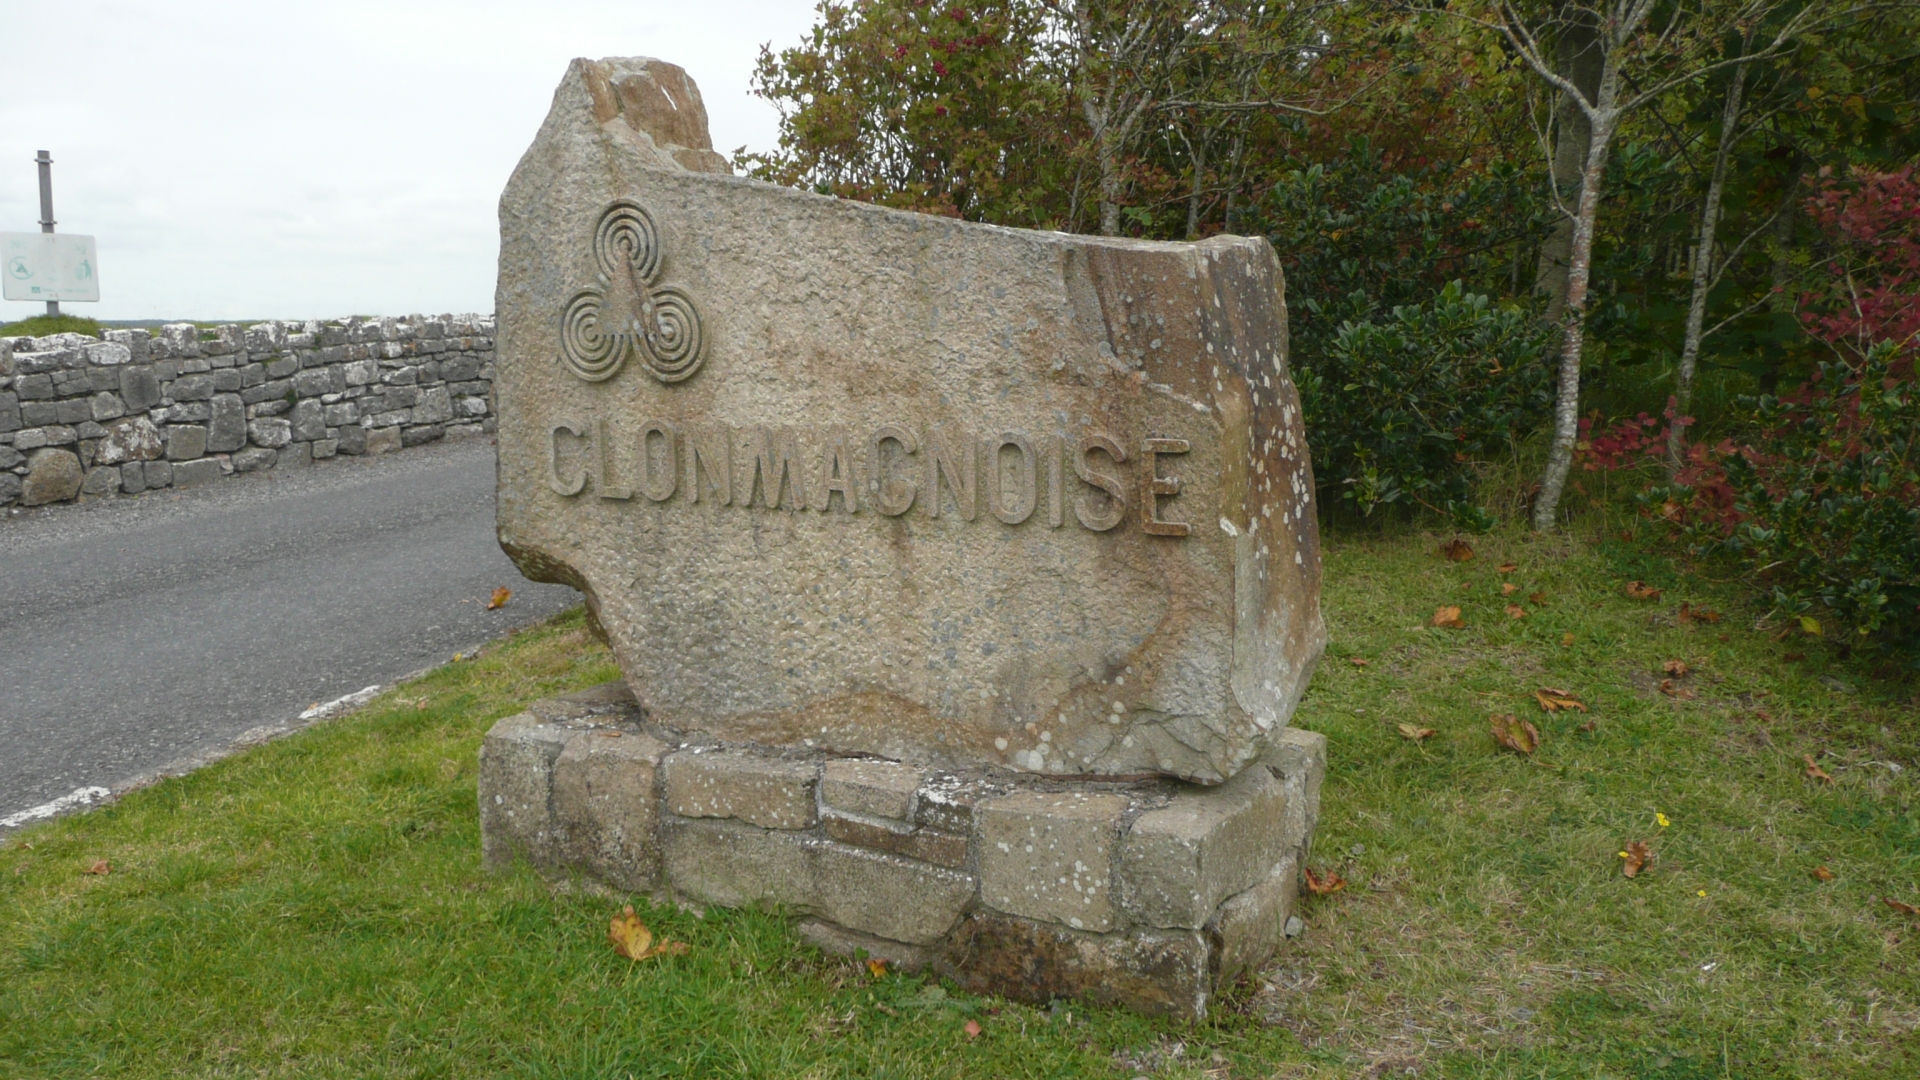 Clonmacnoise Ireland 1920x1080